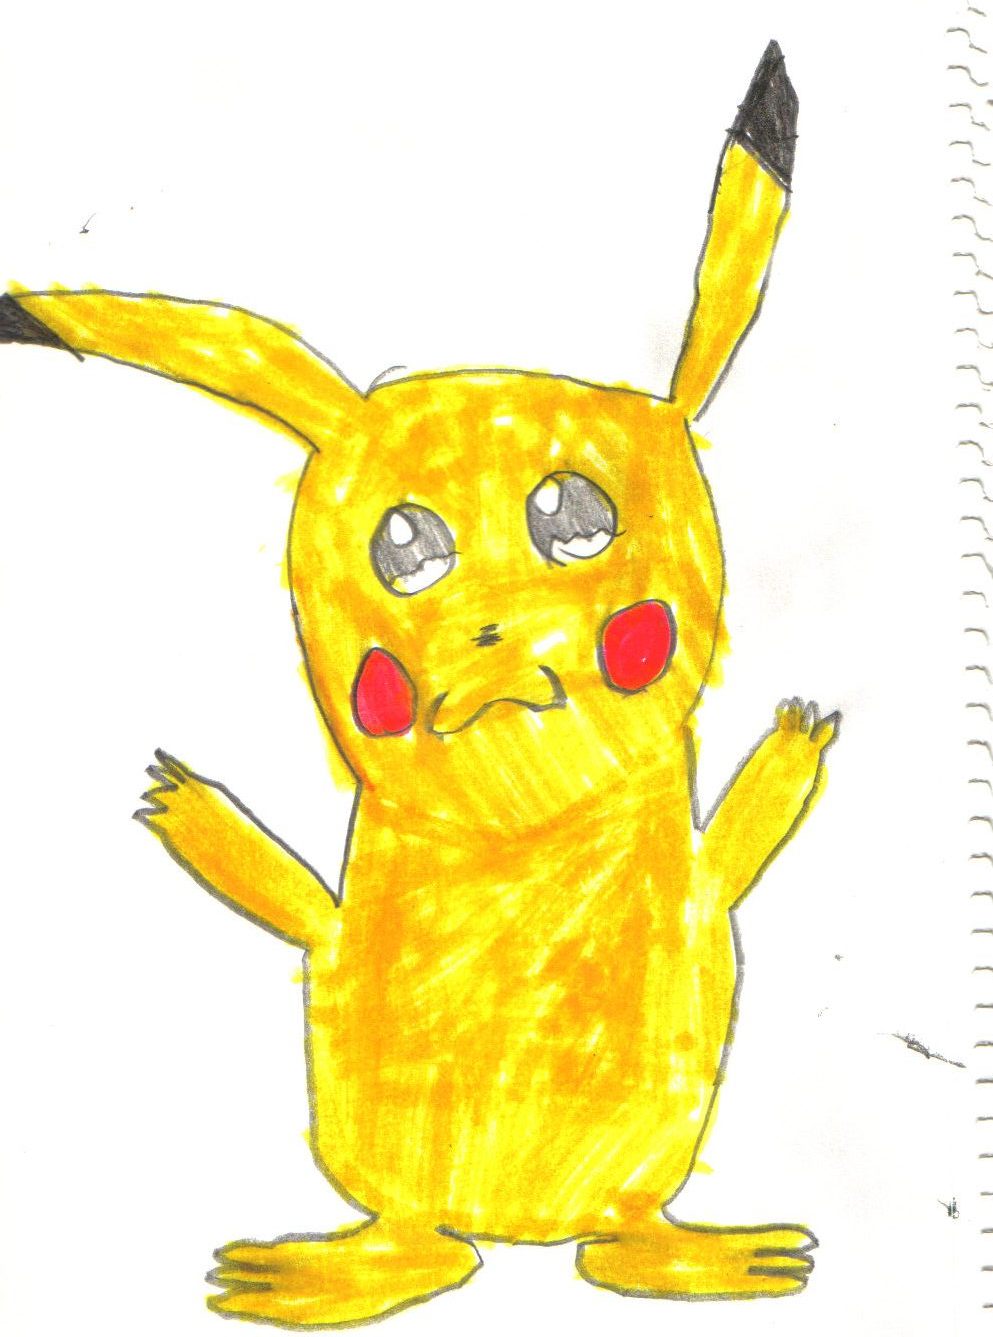 My Pikachu! by DarkDemonDragon